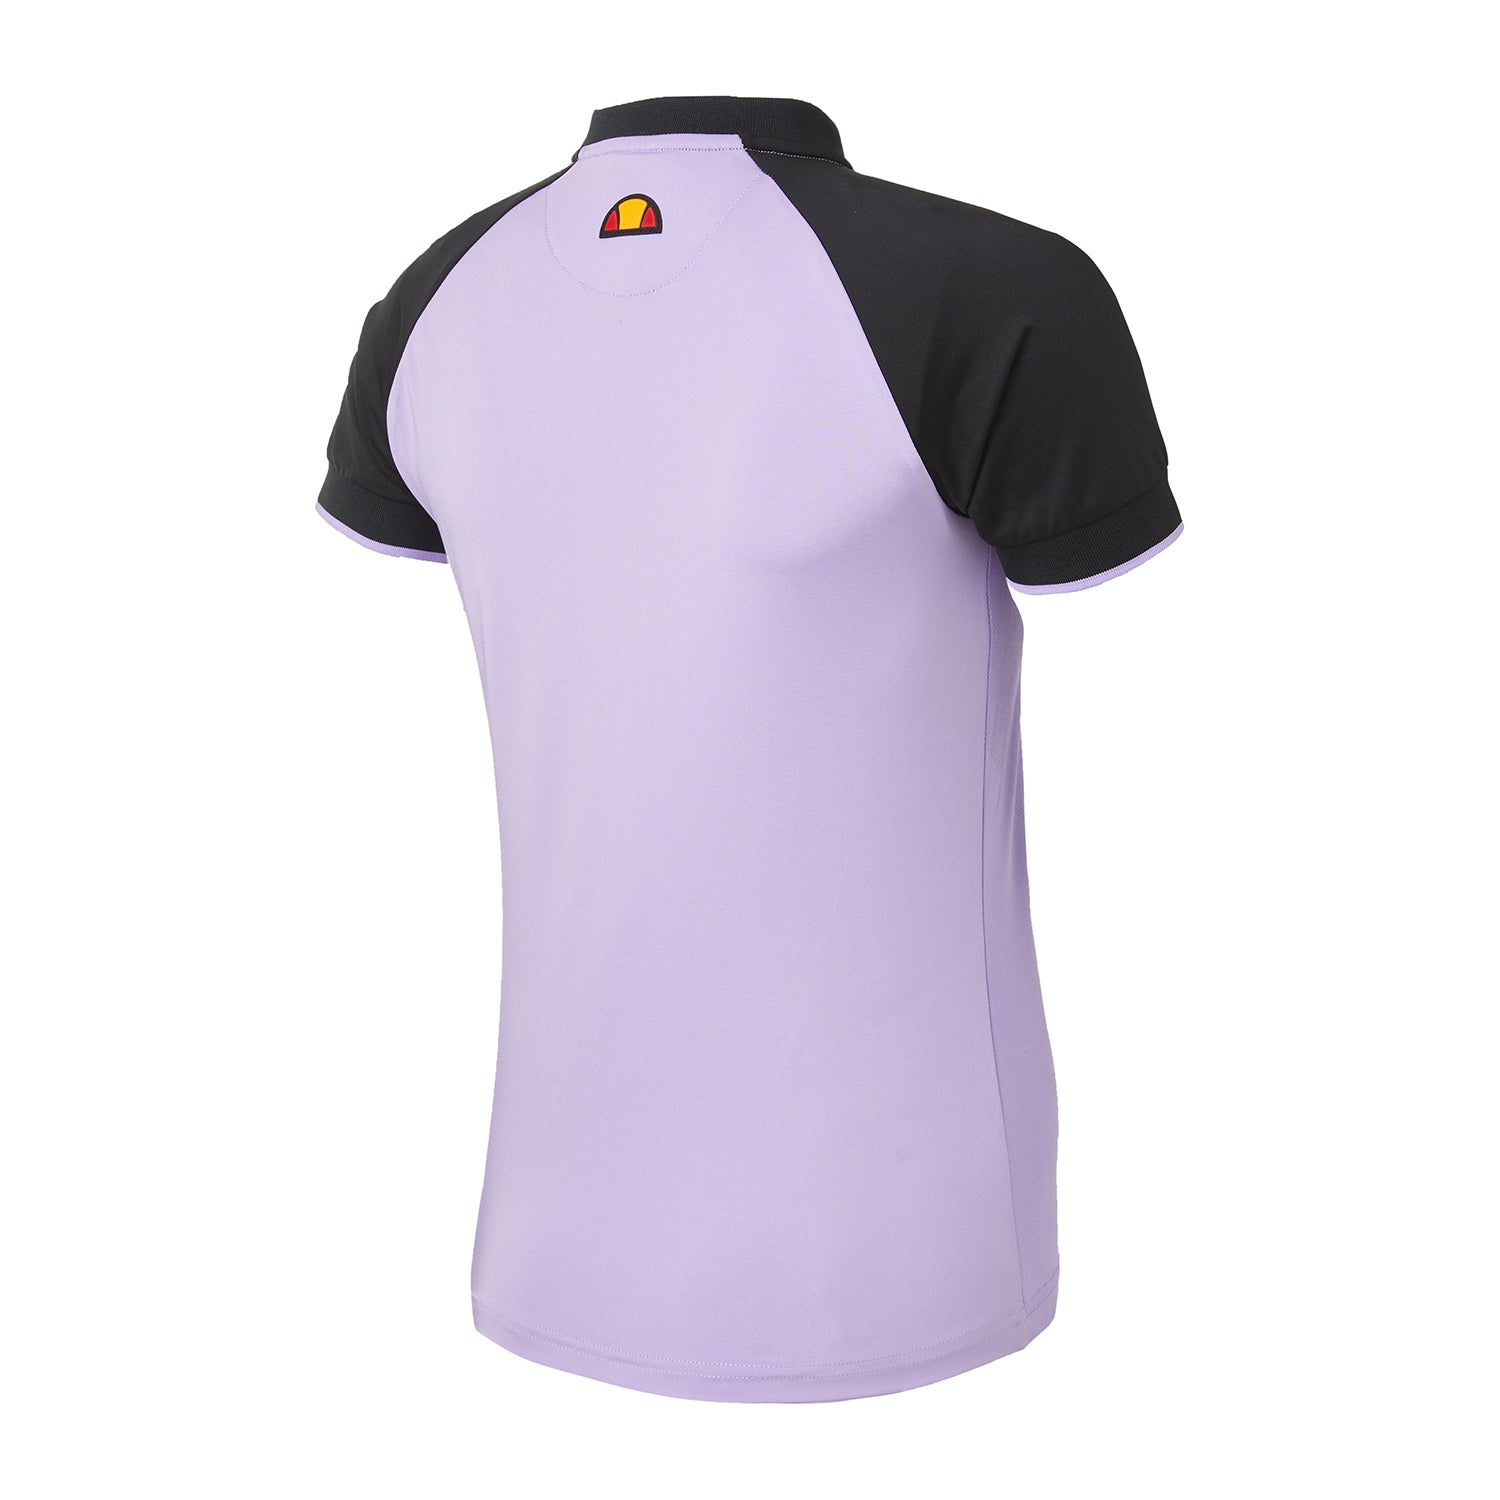 Ellesse Ladies Colour Block Short Sleeve Polo Shirt in Light Purple